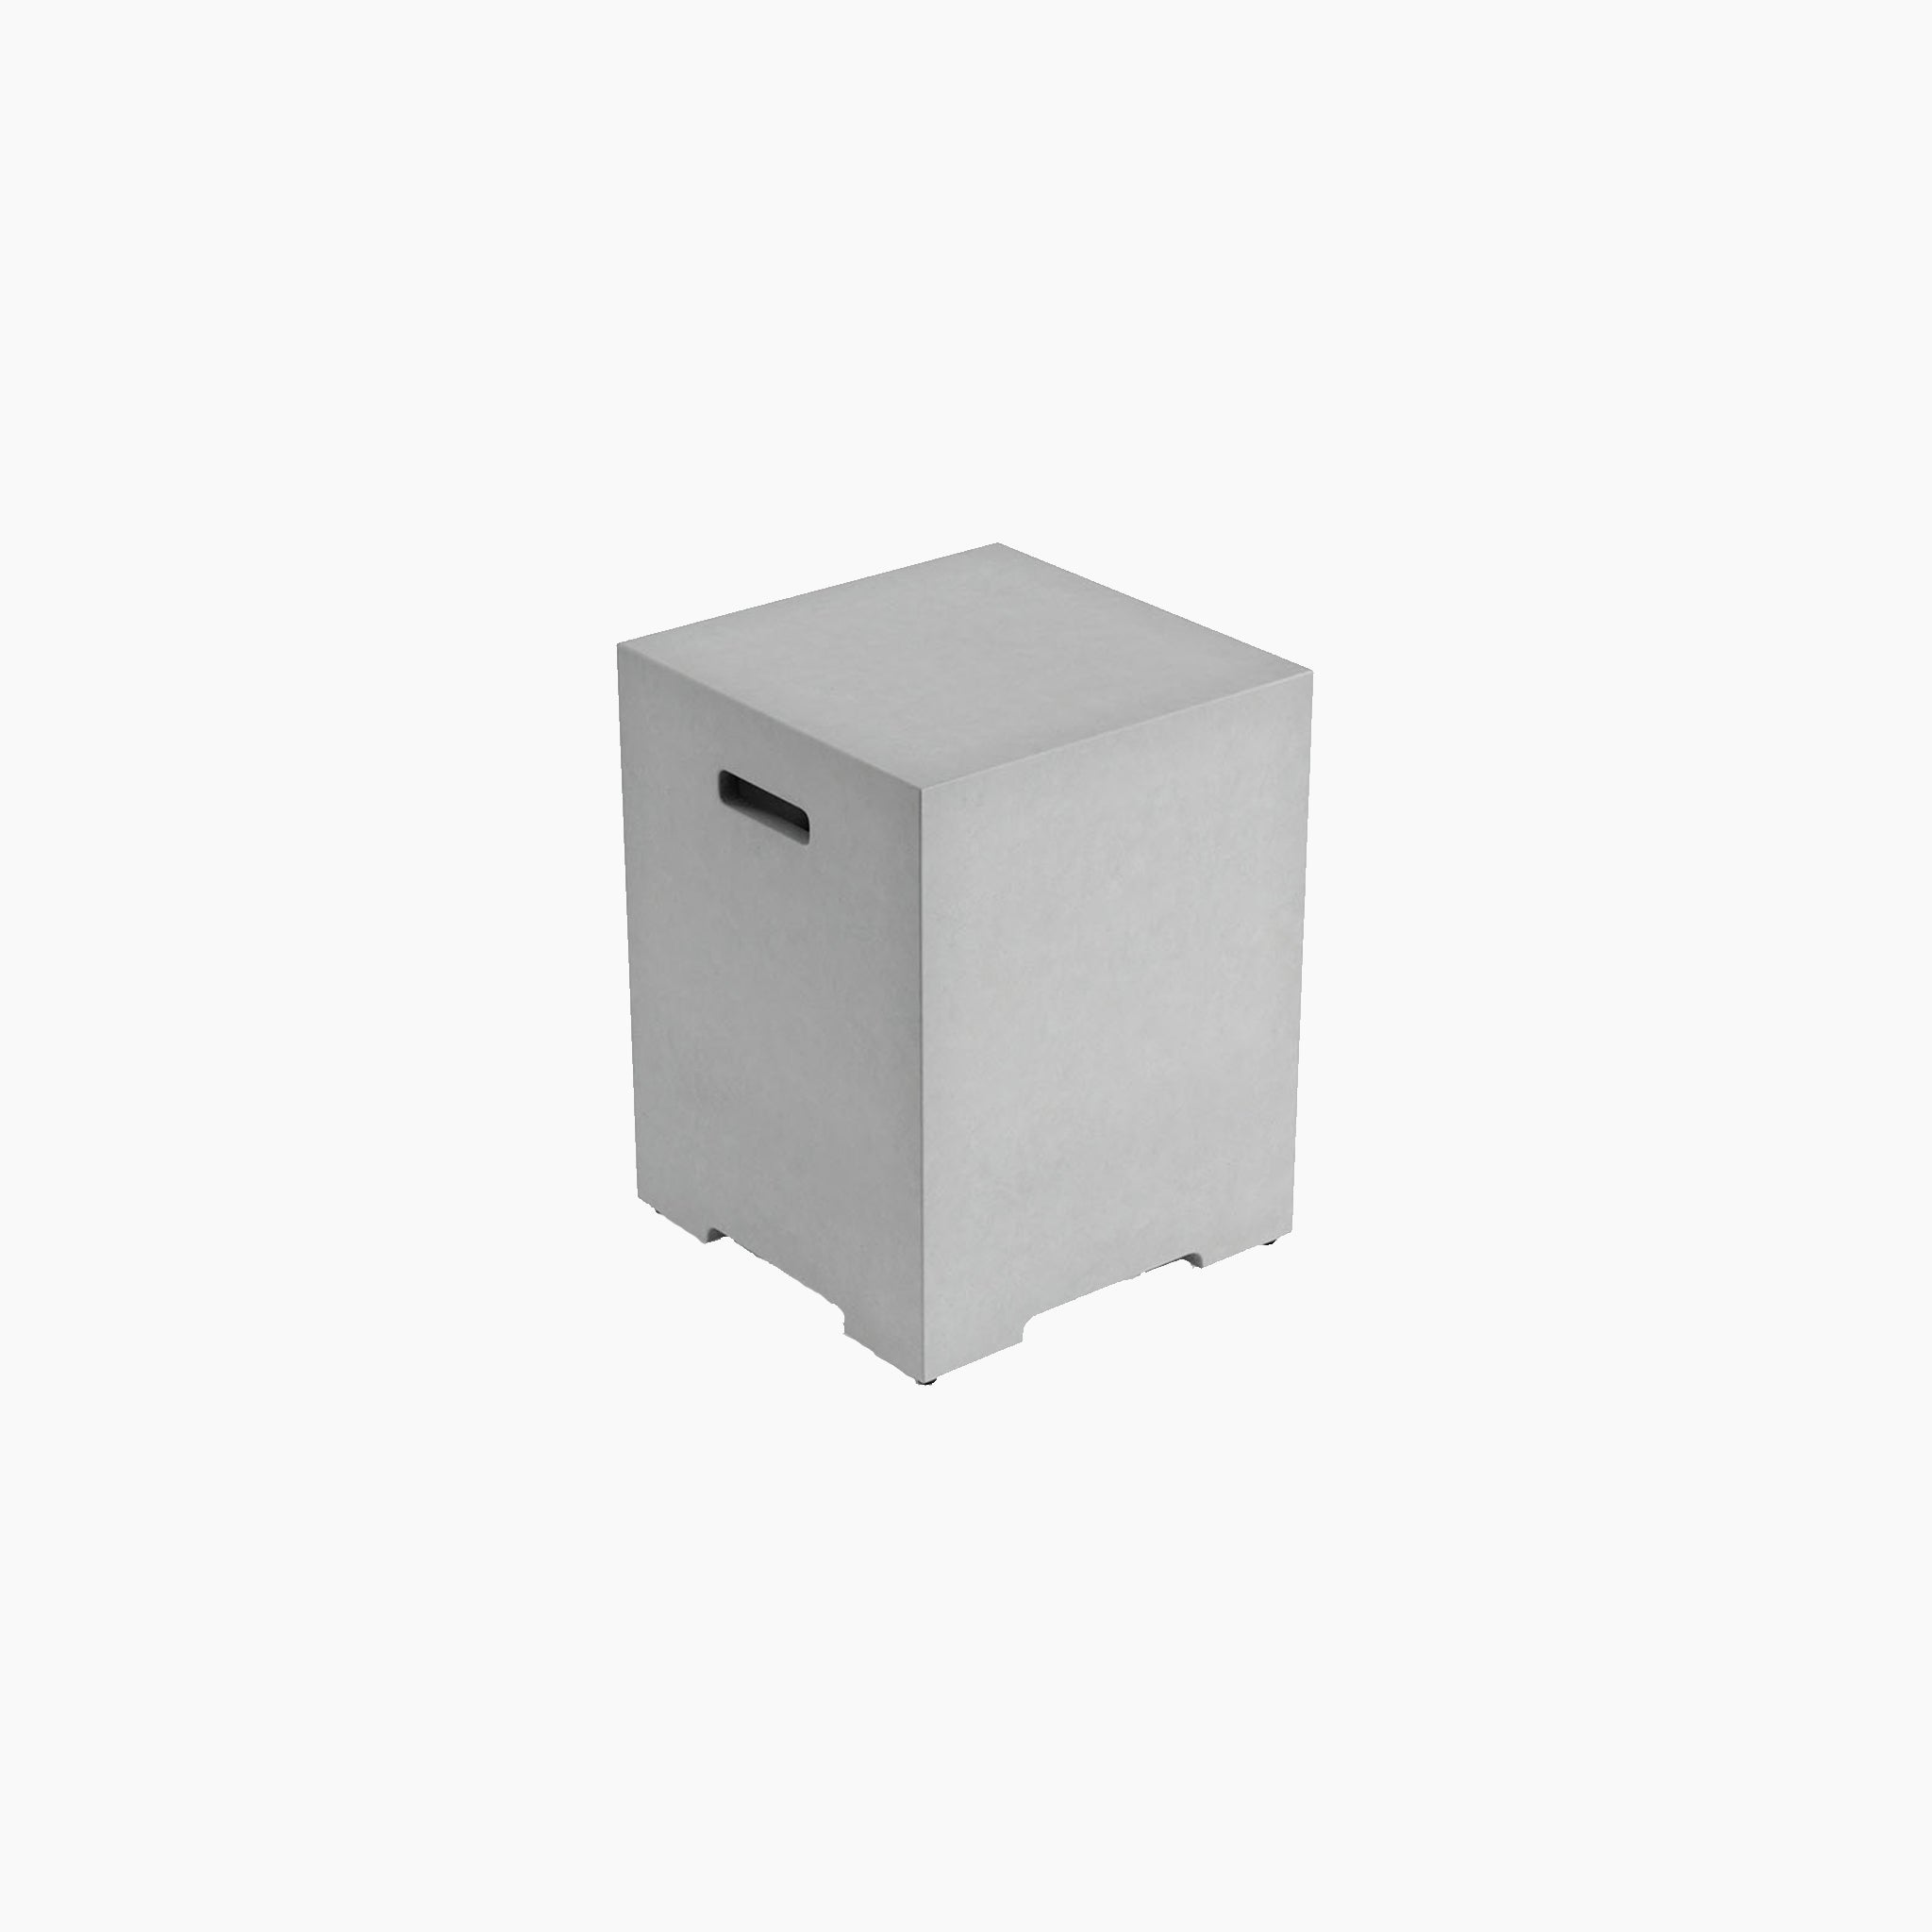 Ember Gas Storage Box in Stone Grey